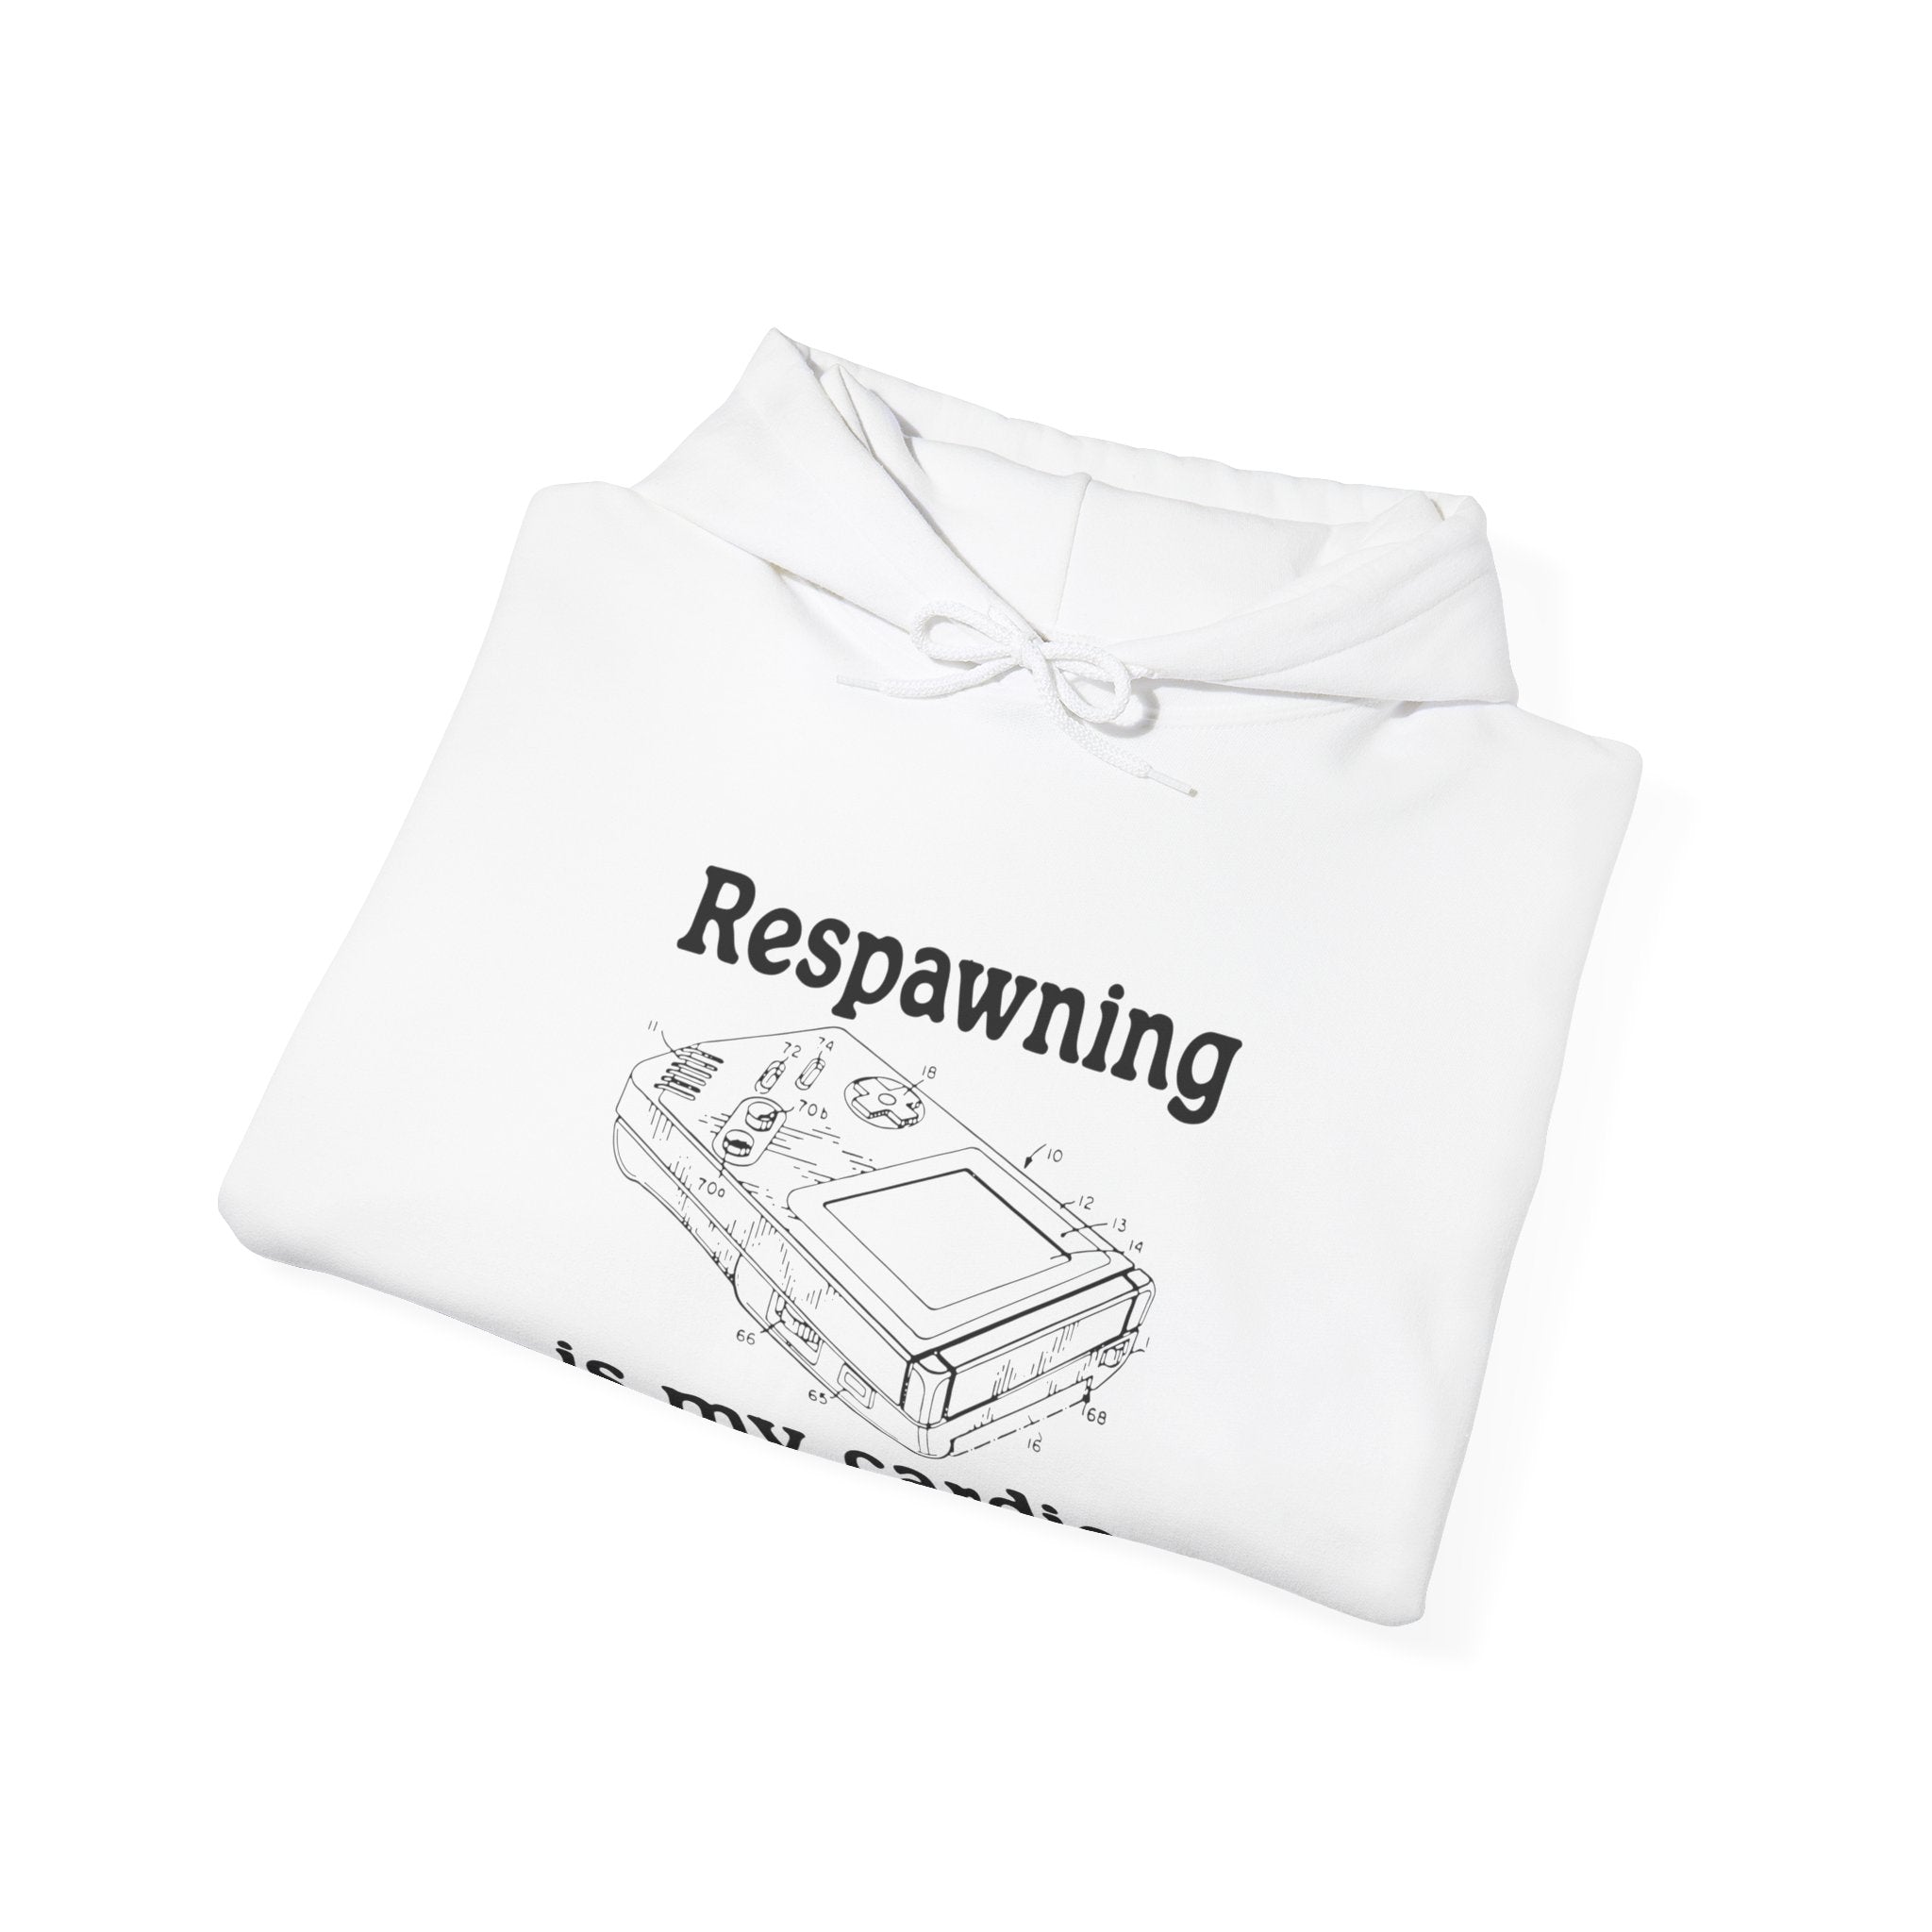 Respawning is My Cardio - Hooded Sweatshirt